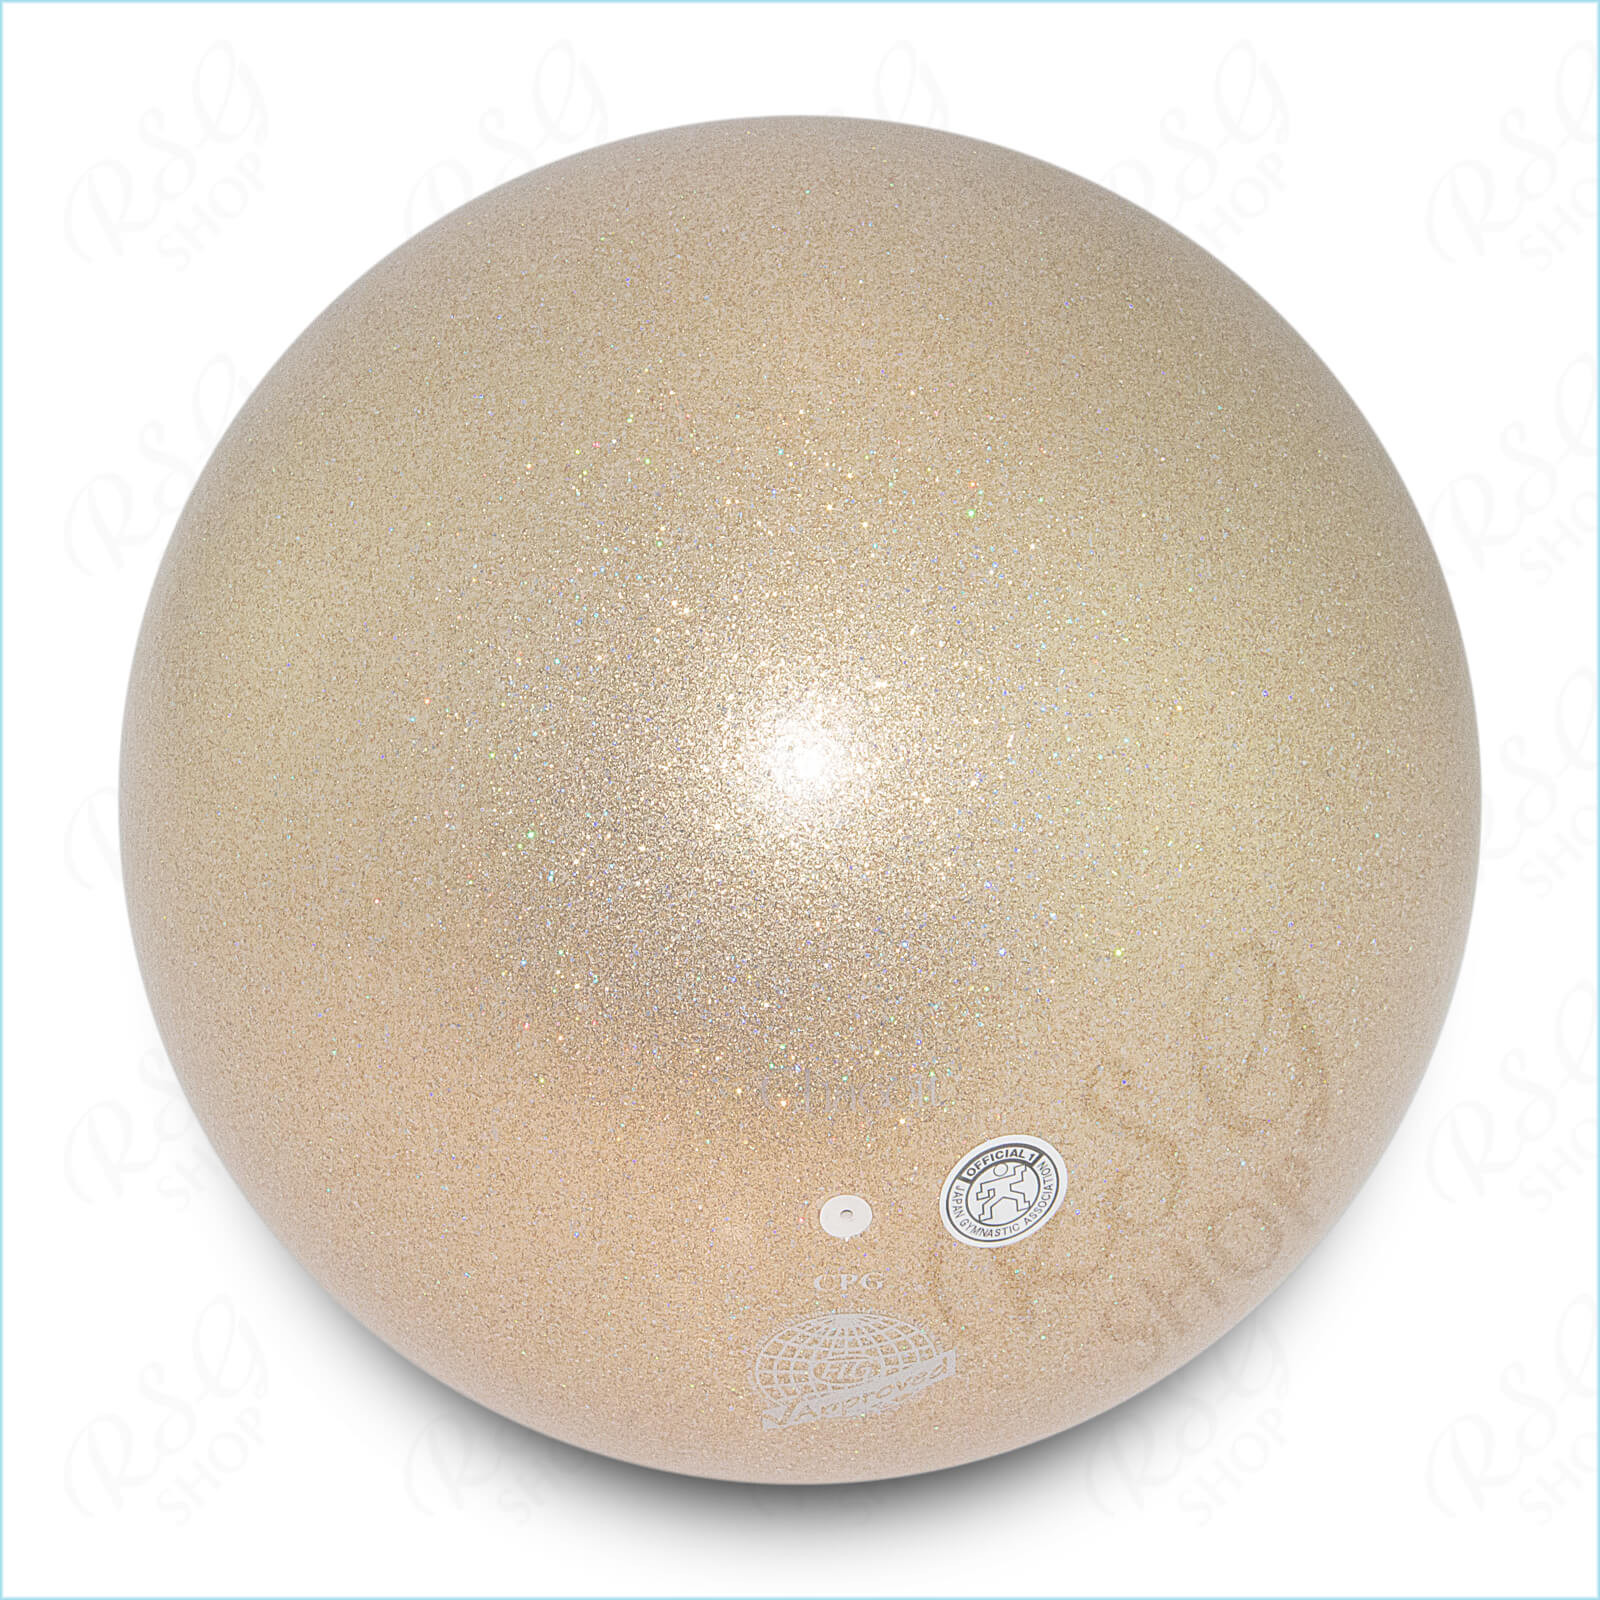 Мяч 18,5 см Chacott Jewelry цвет Перламутр (Pearl) Артикул 501